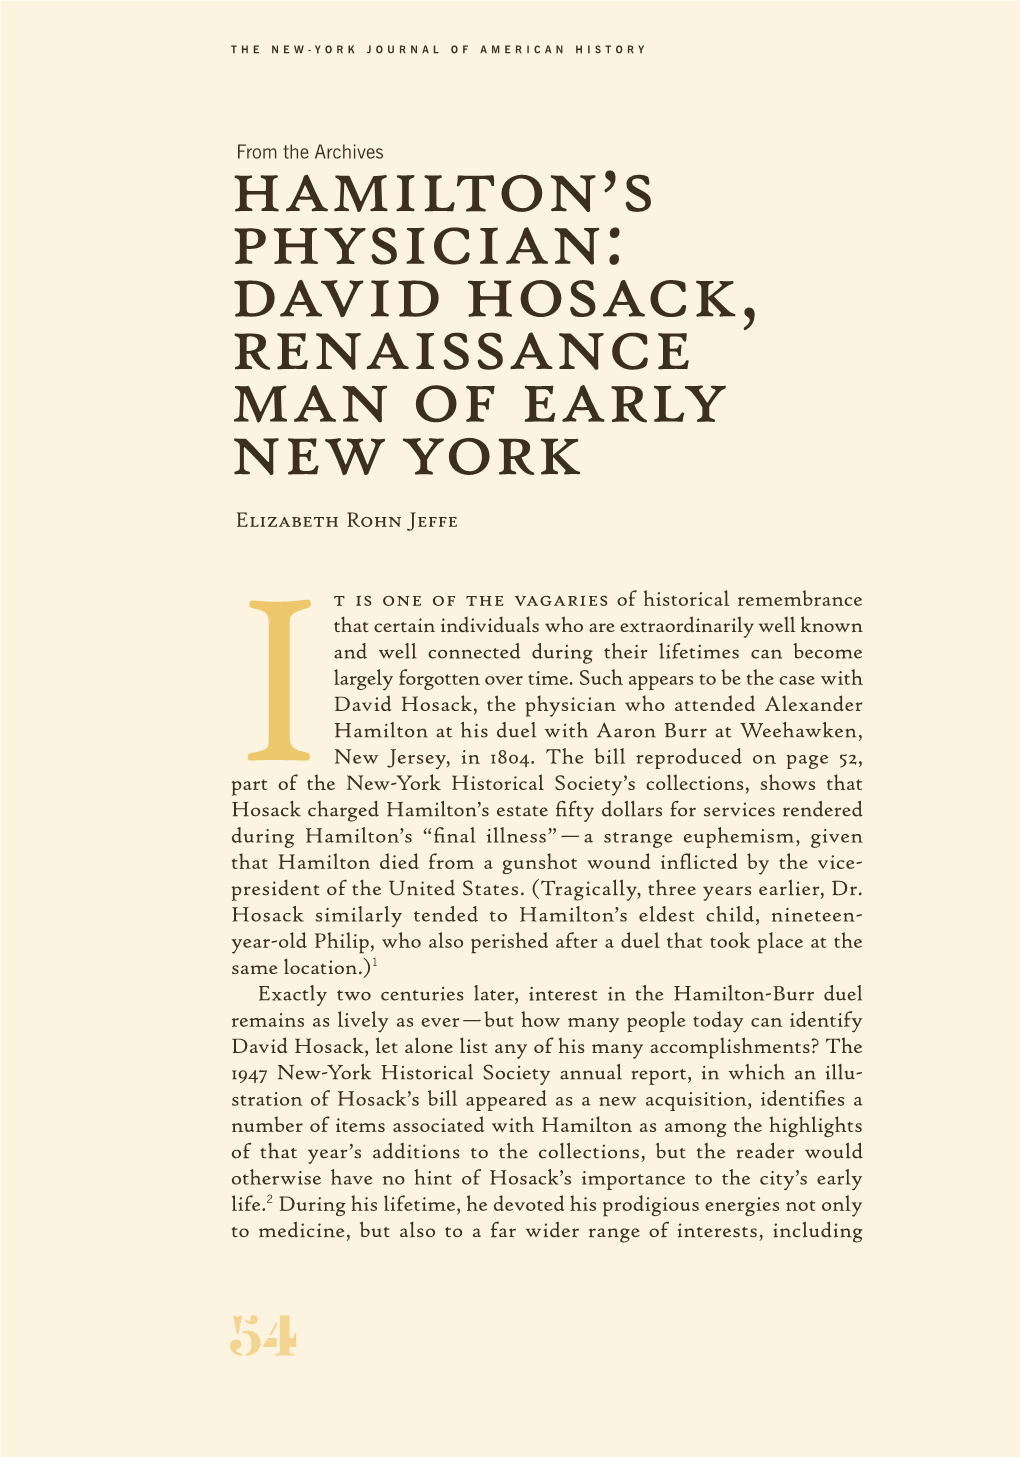 Hamilton's Physician: David Hosack, Renaissance